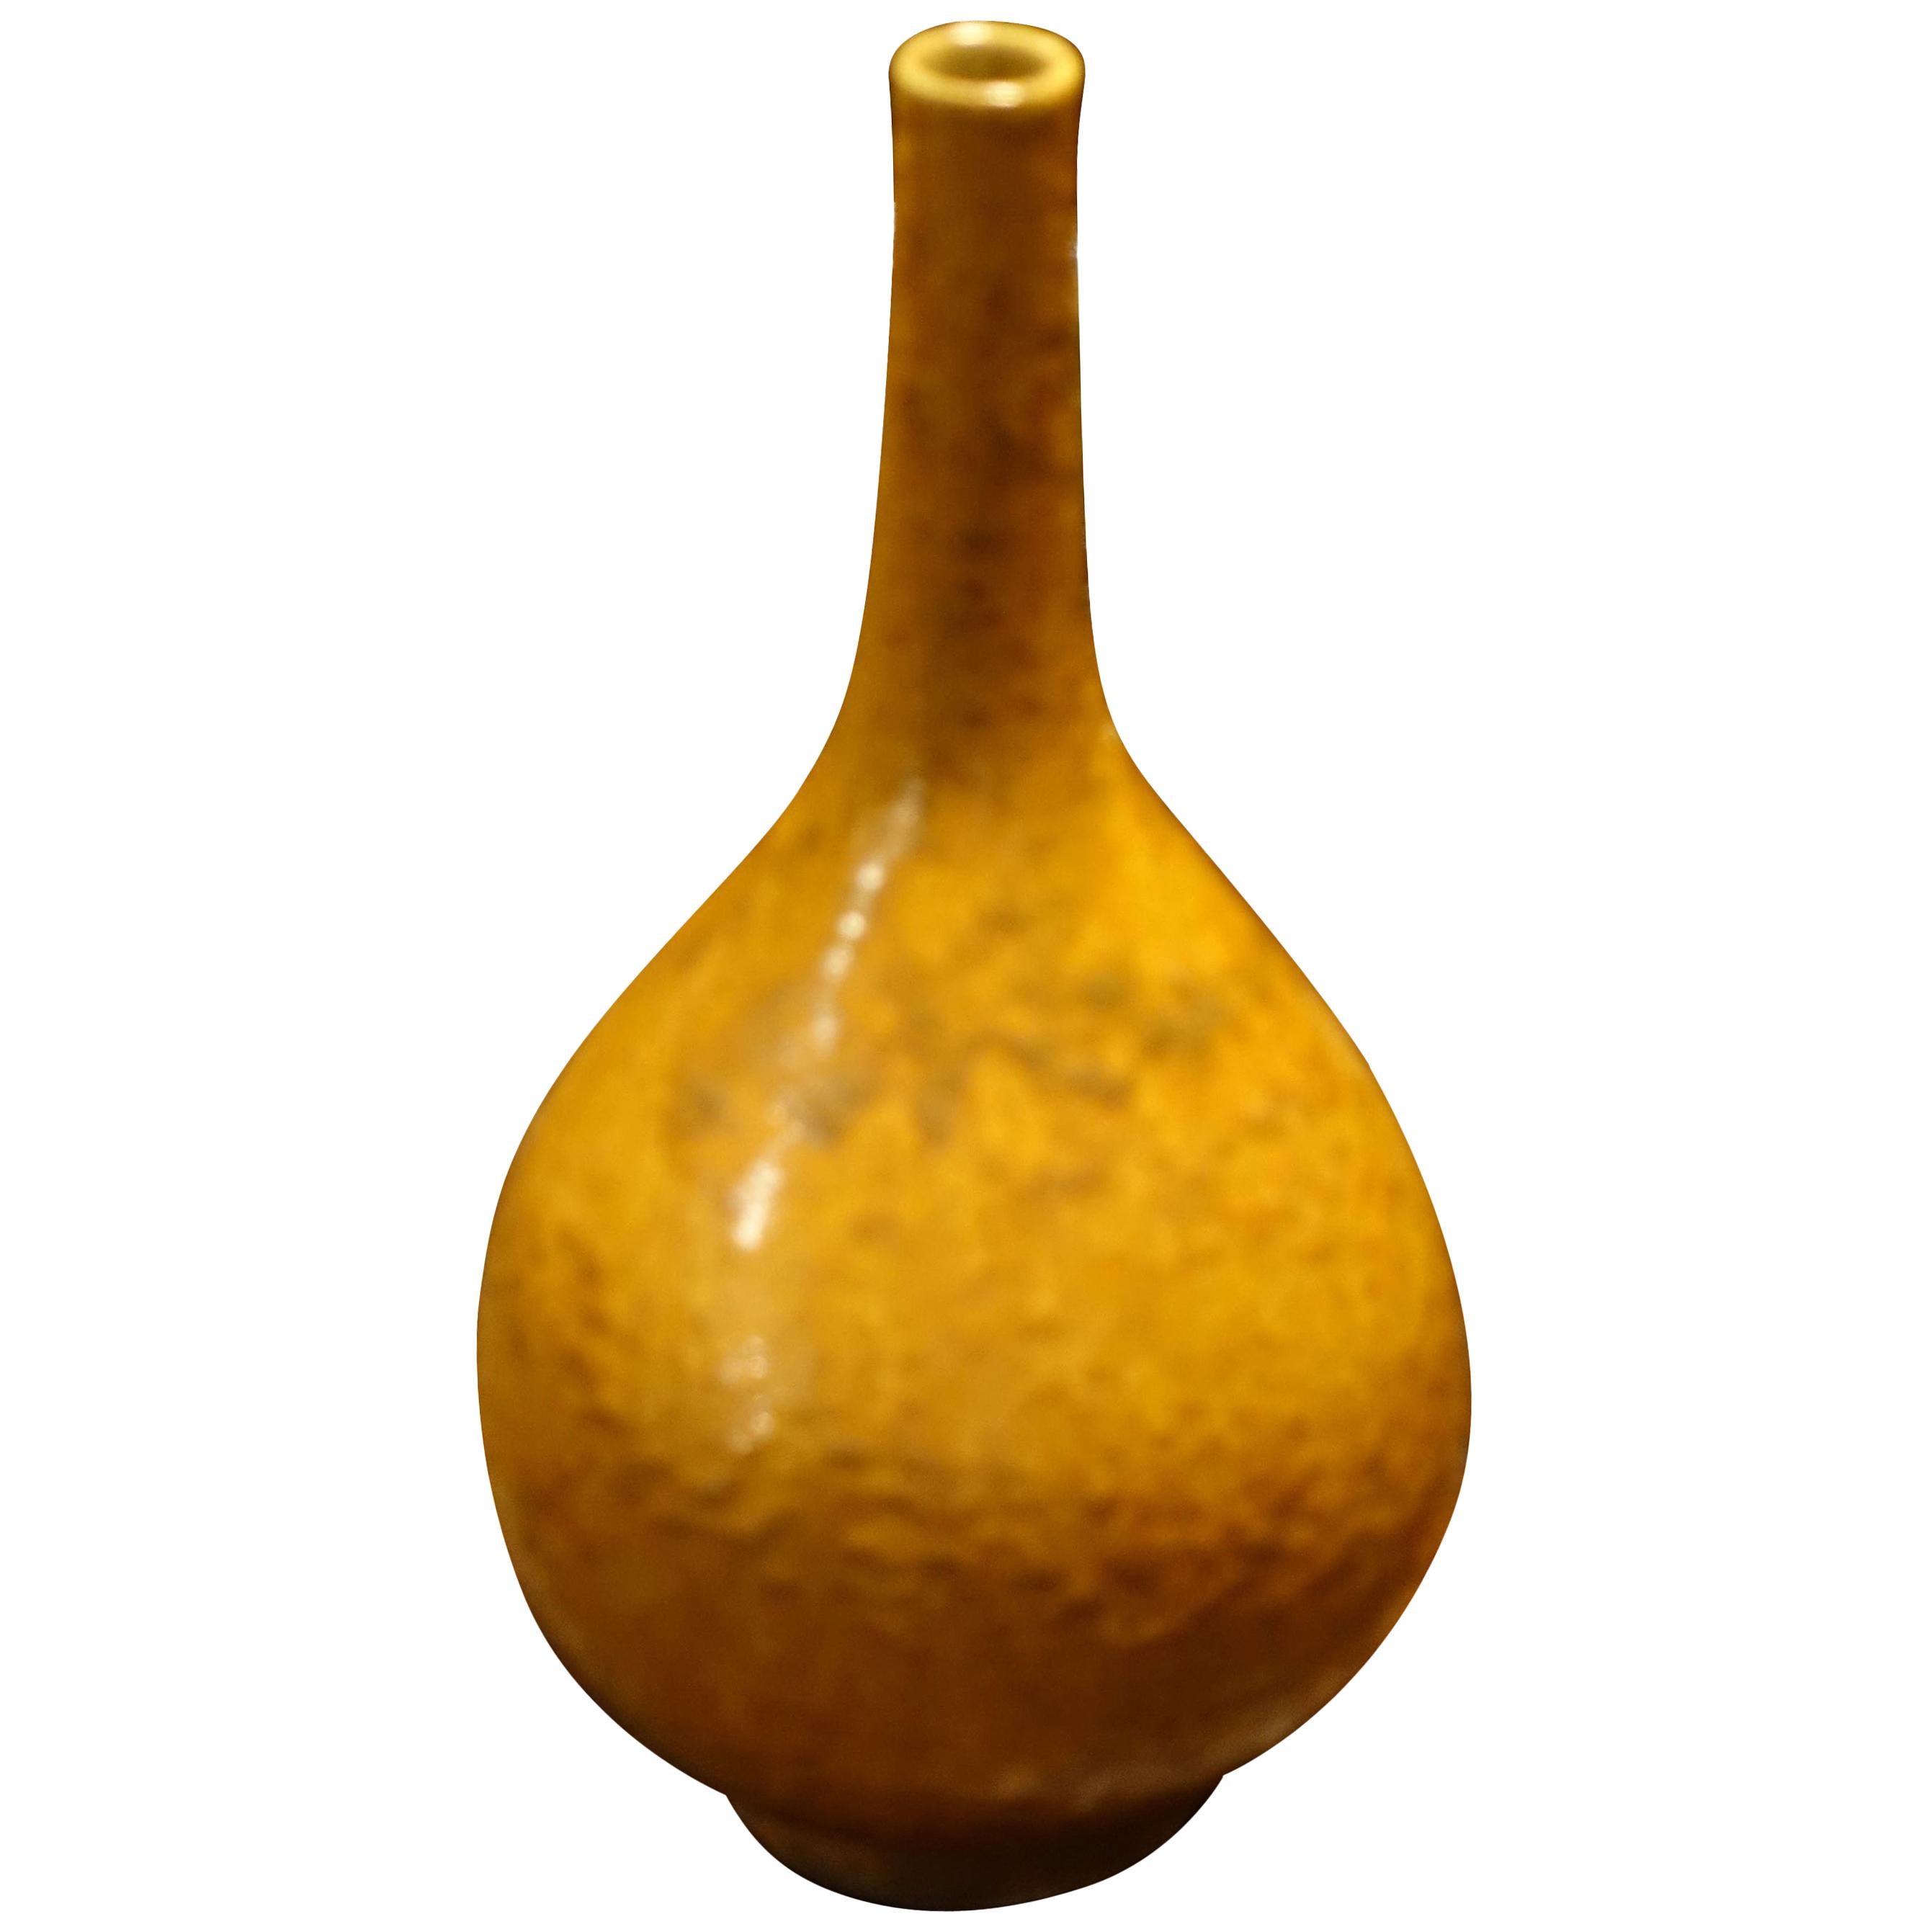 Gold Glazed Vase, China, Contemporary